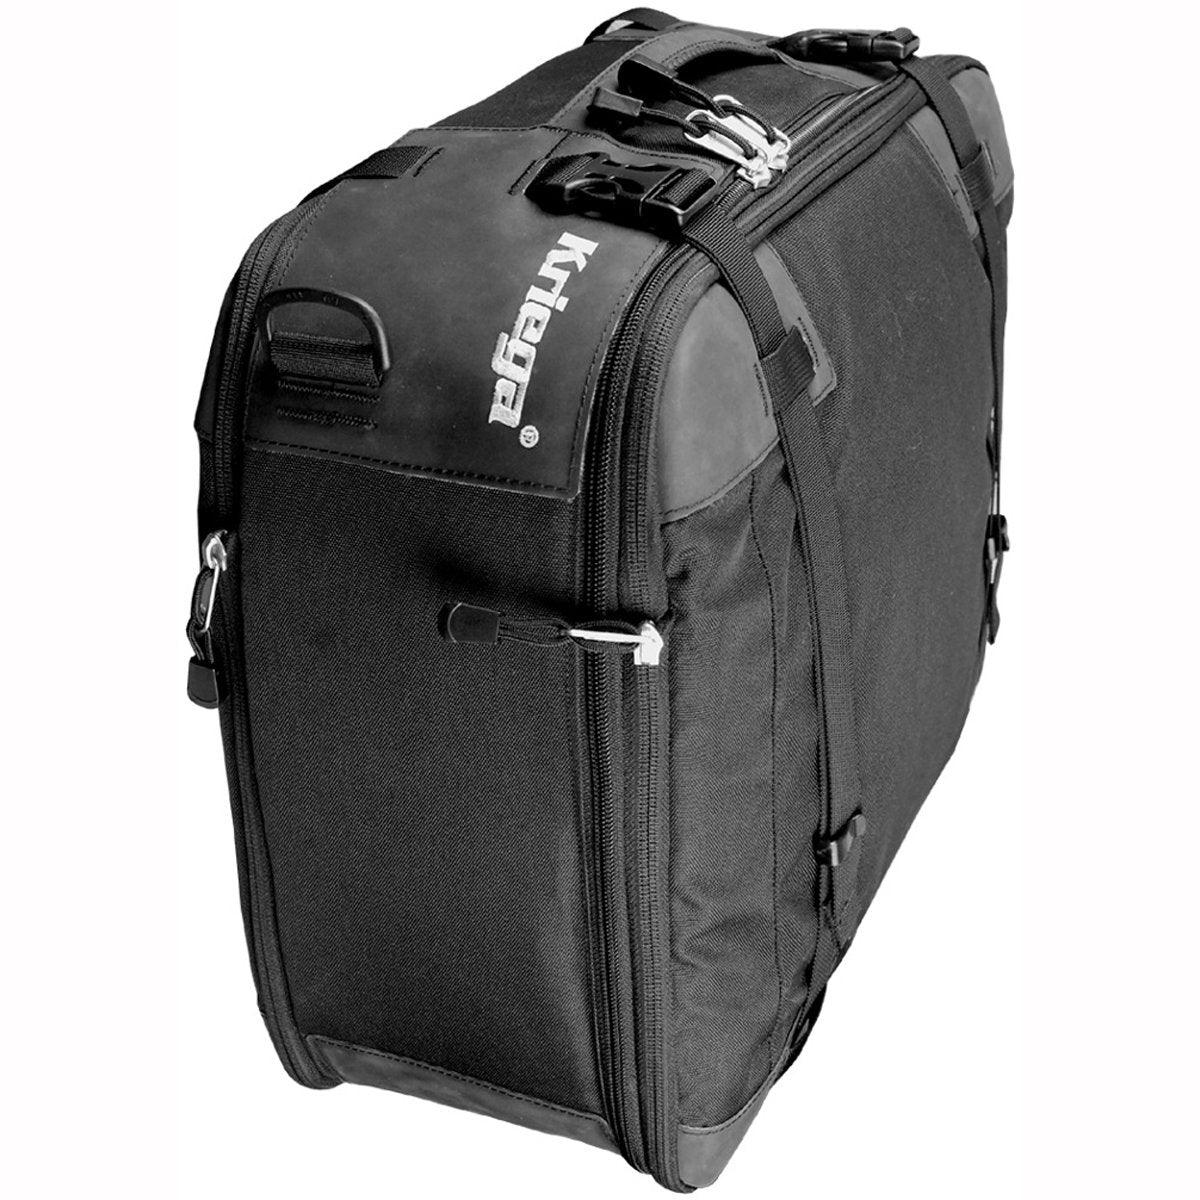 Kriega KS40 Travel Bag - Black